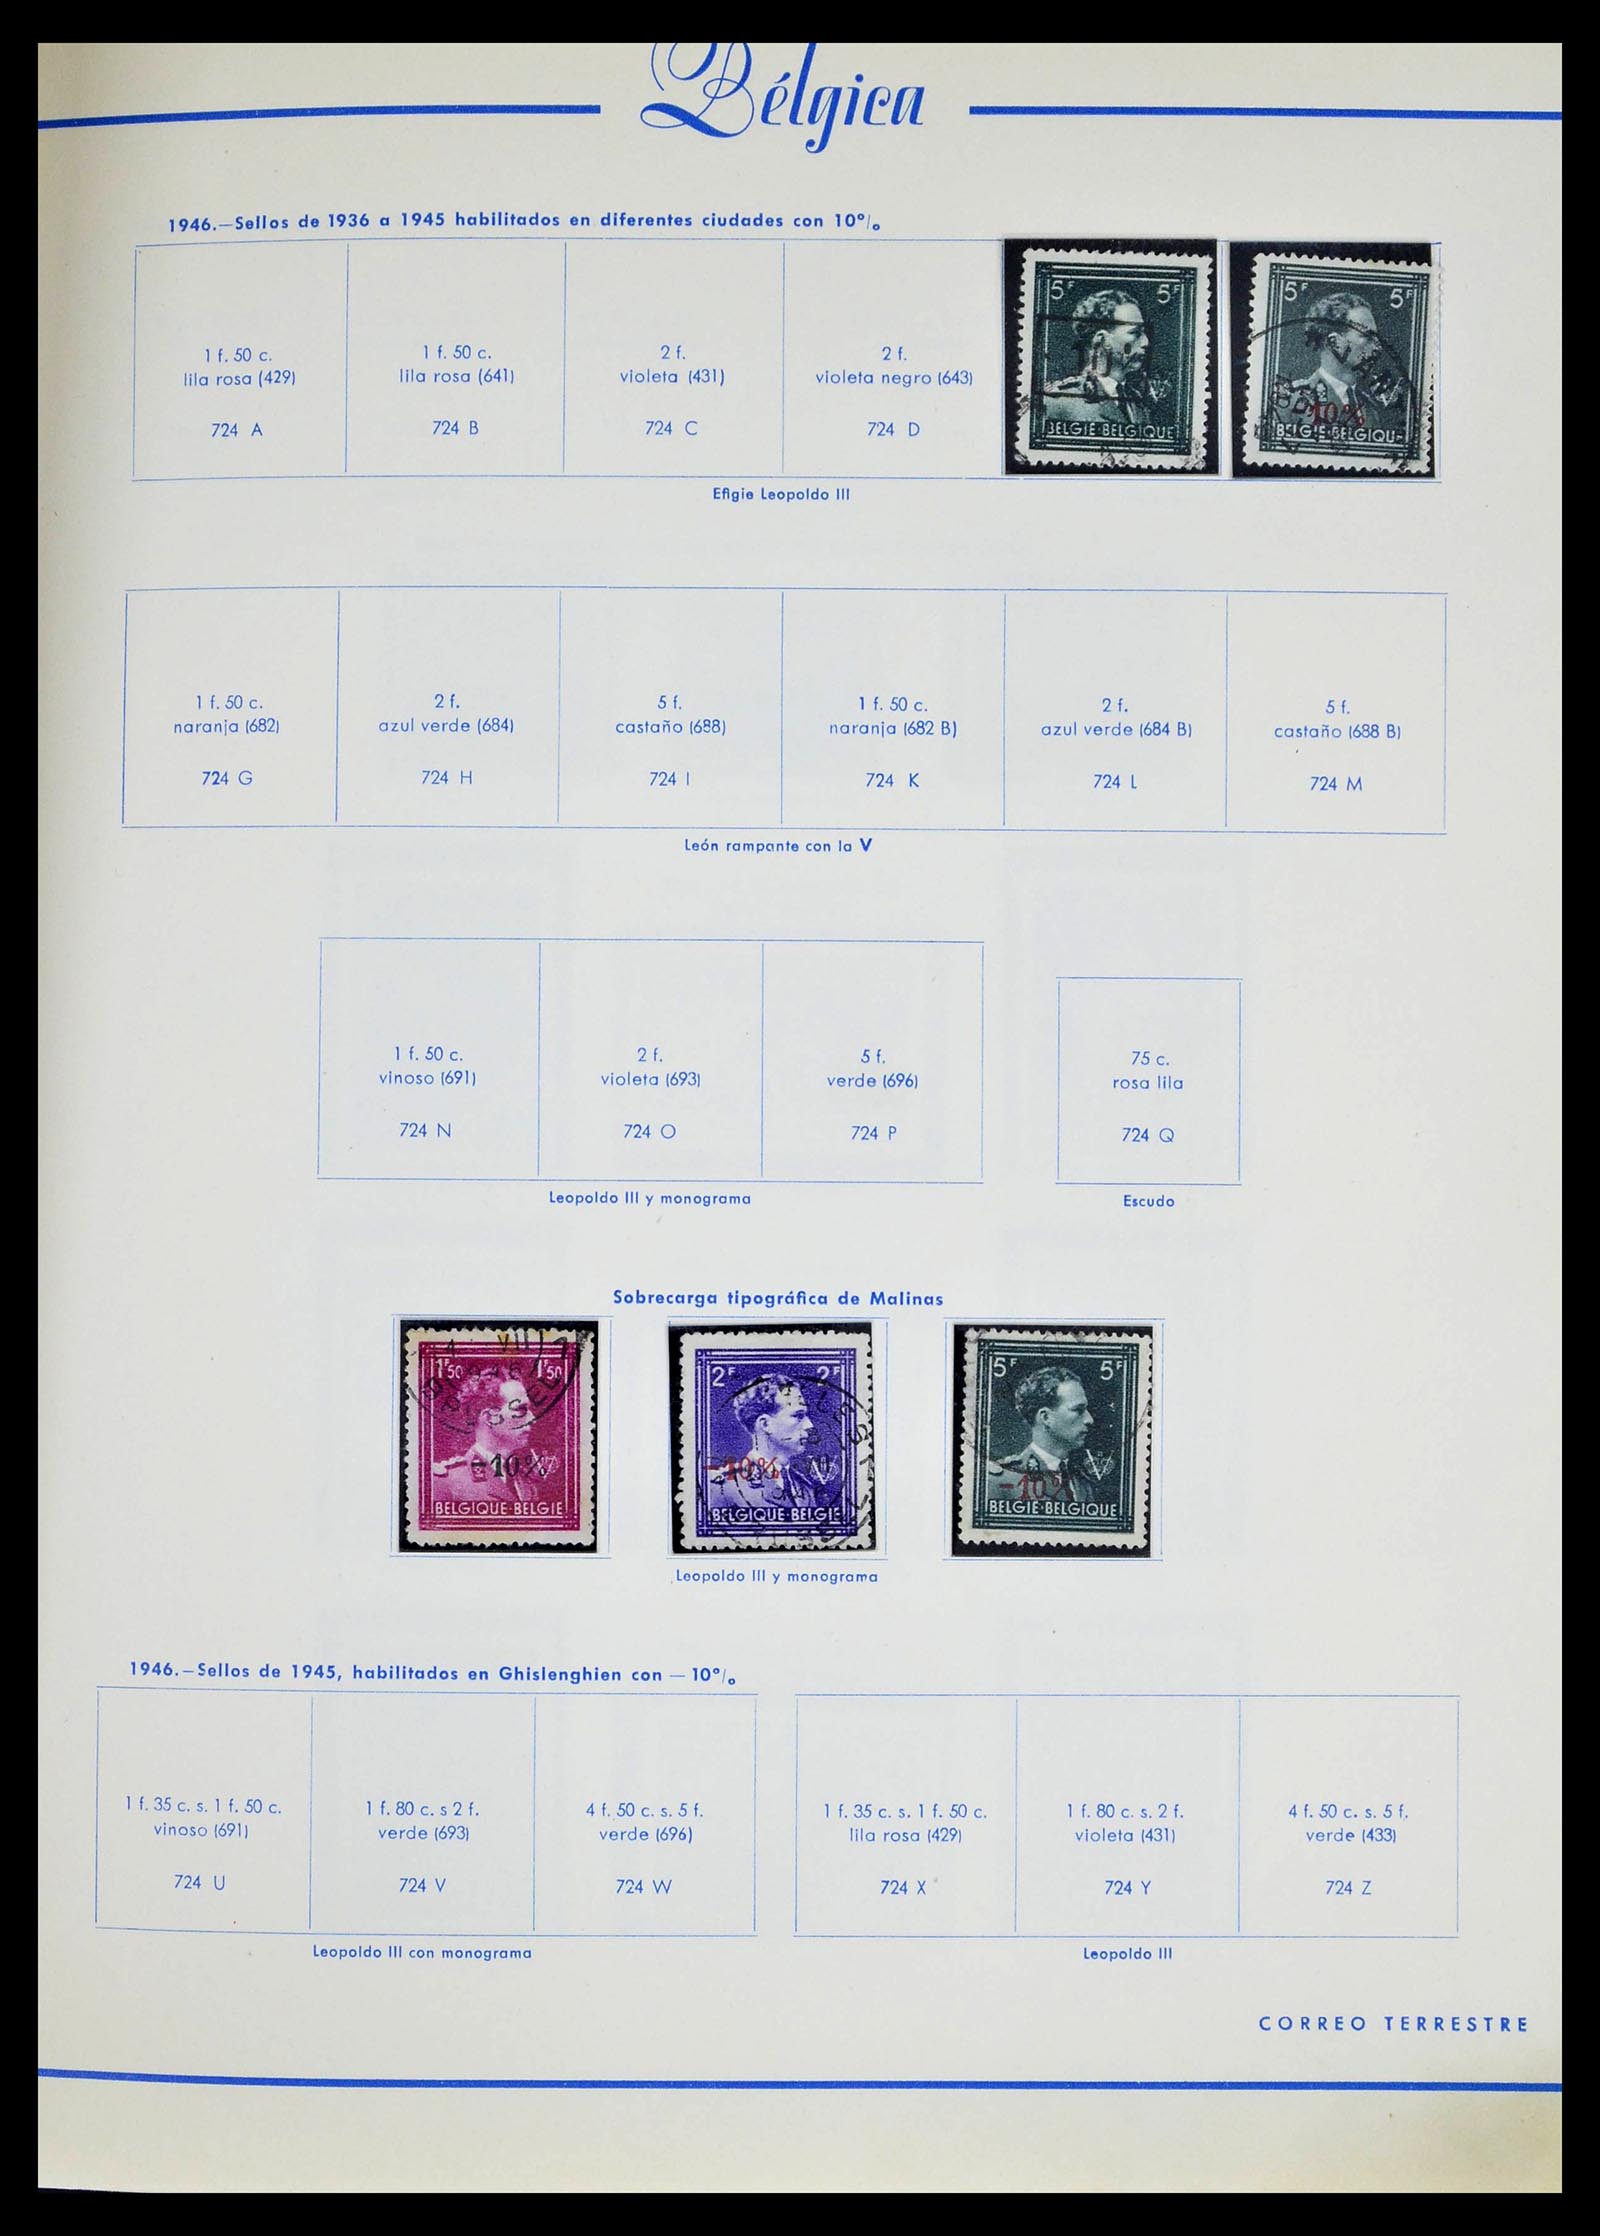 39230 0049 - Stamp collection 39230 Belgium 1849-1976.